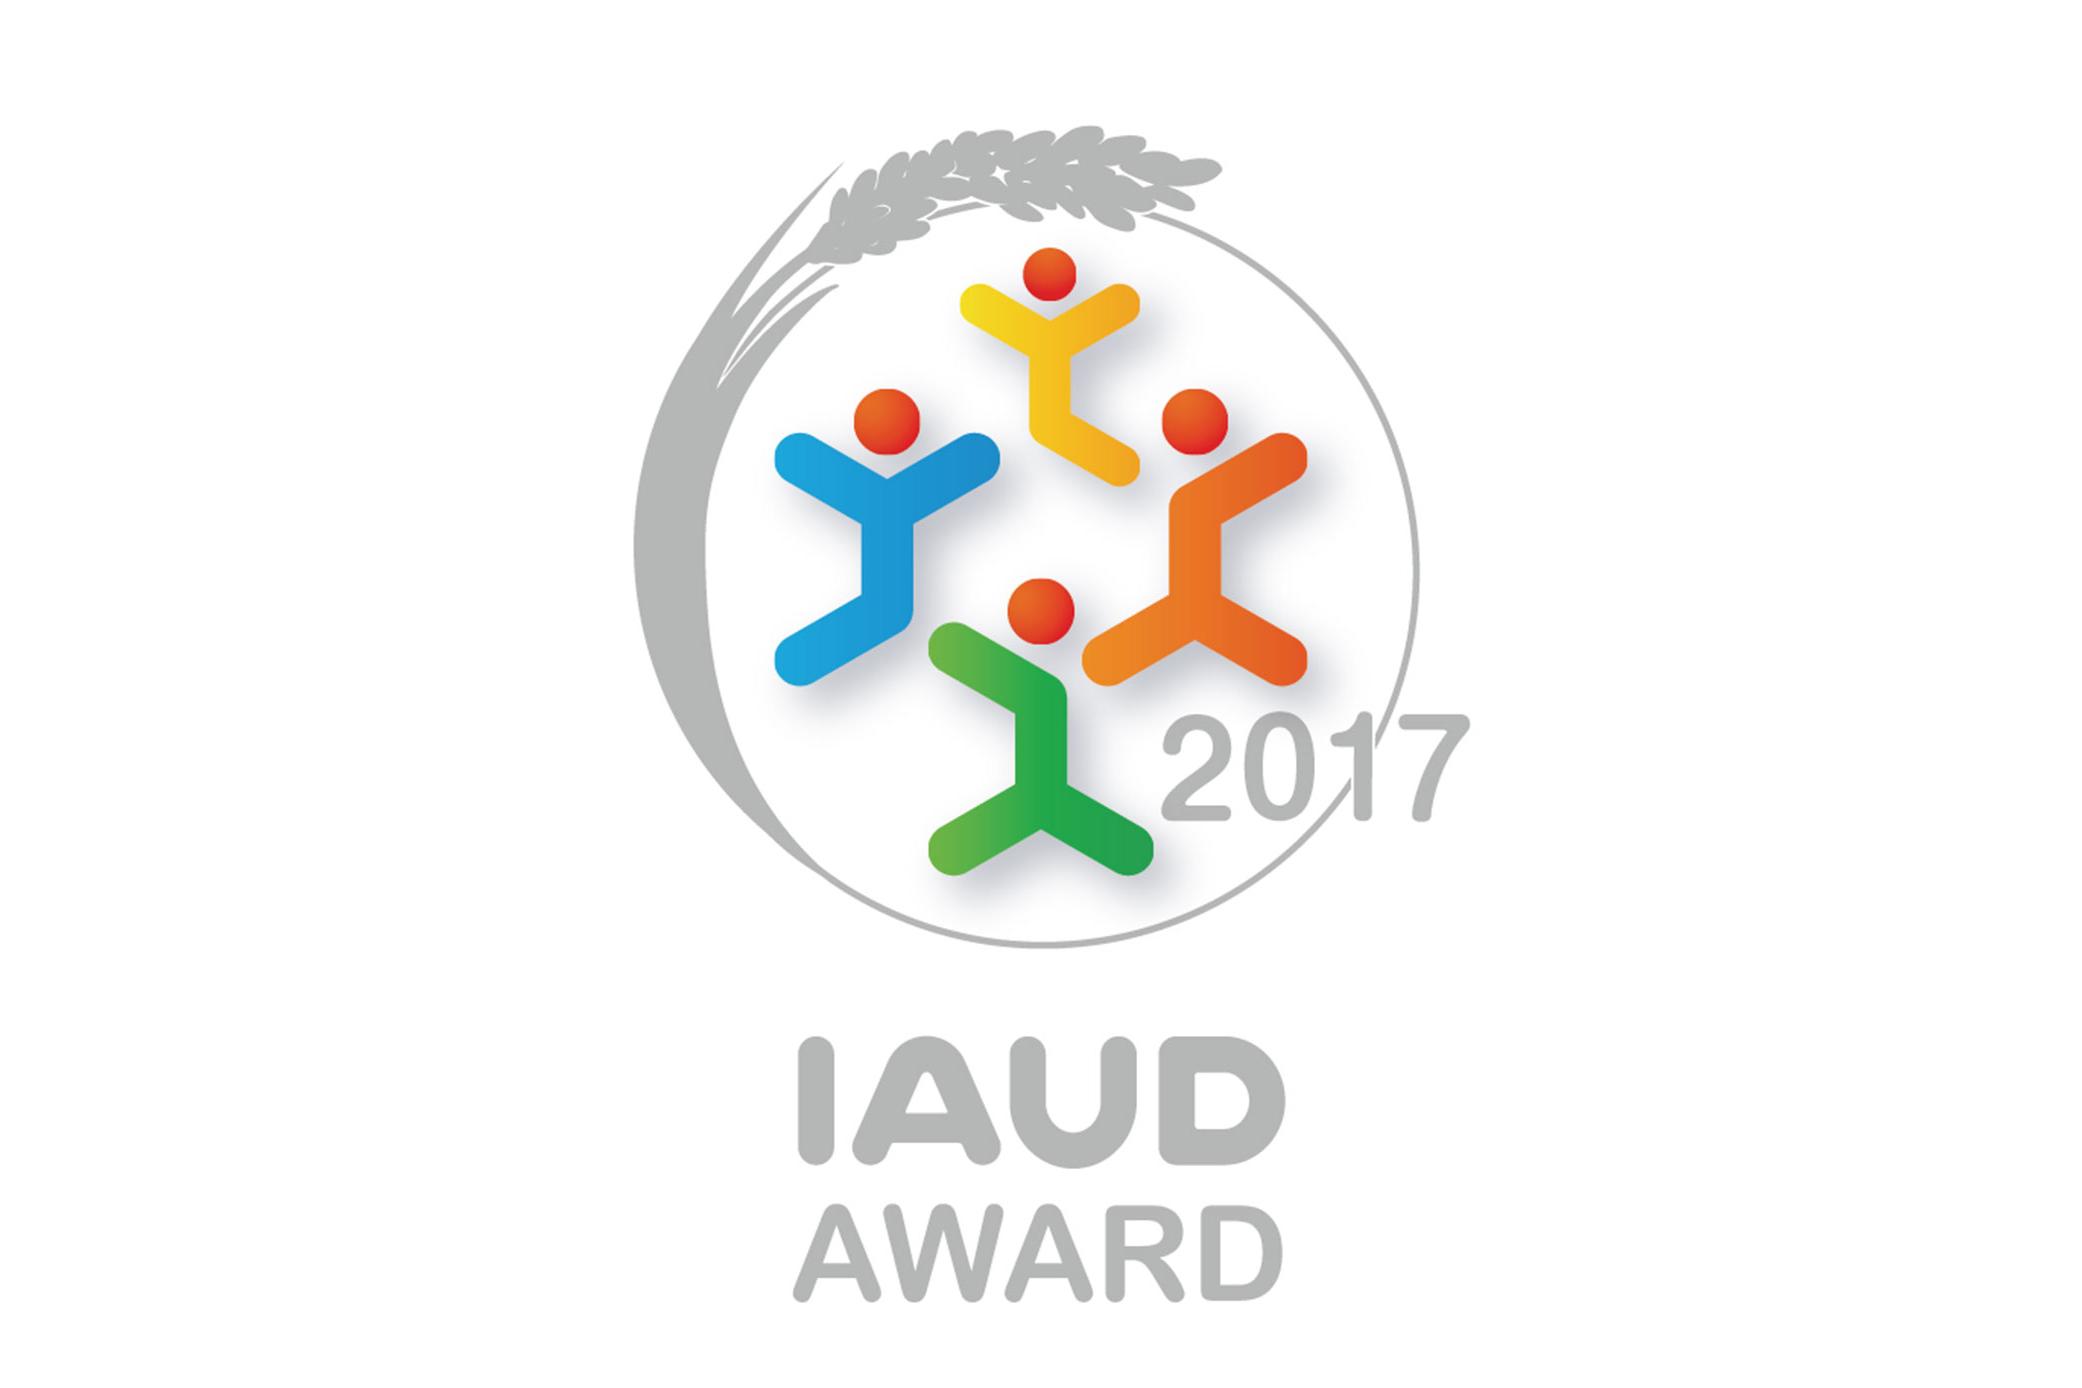 image: IAUD Award 2017 Silver Award logo